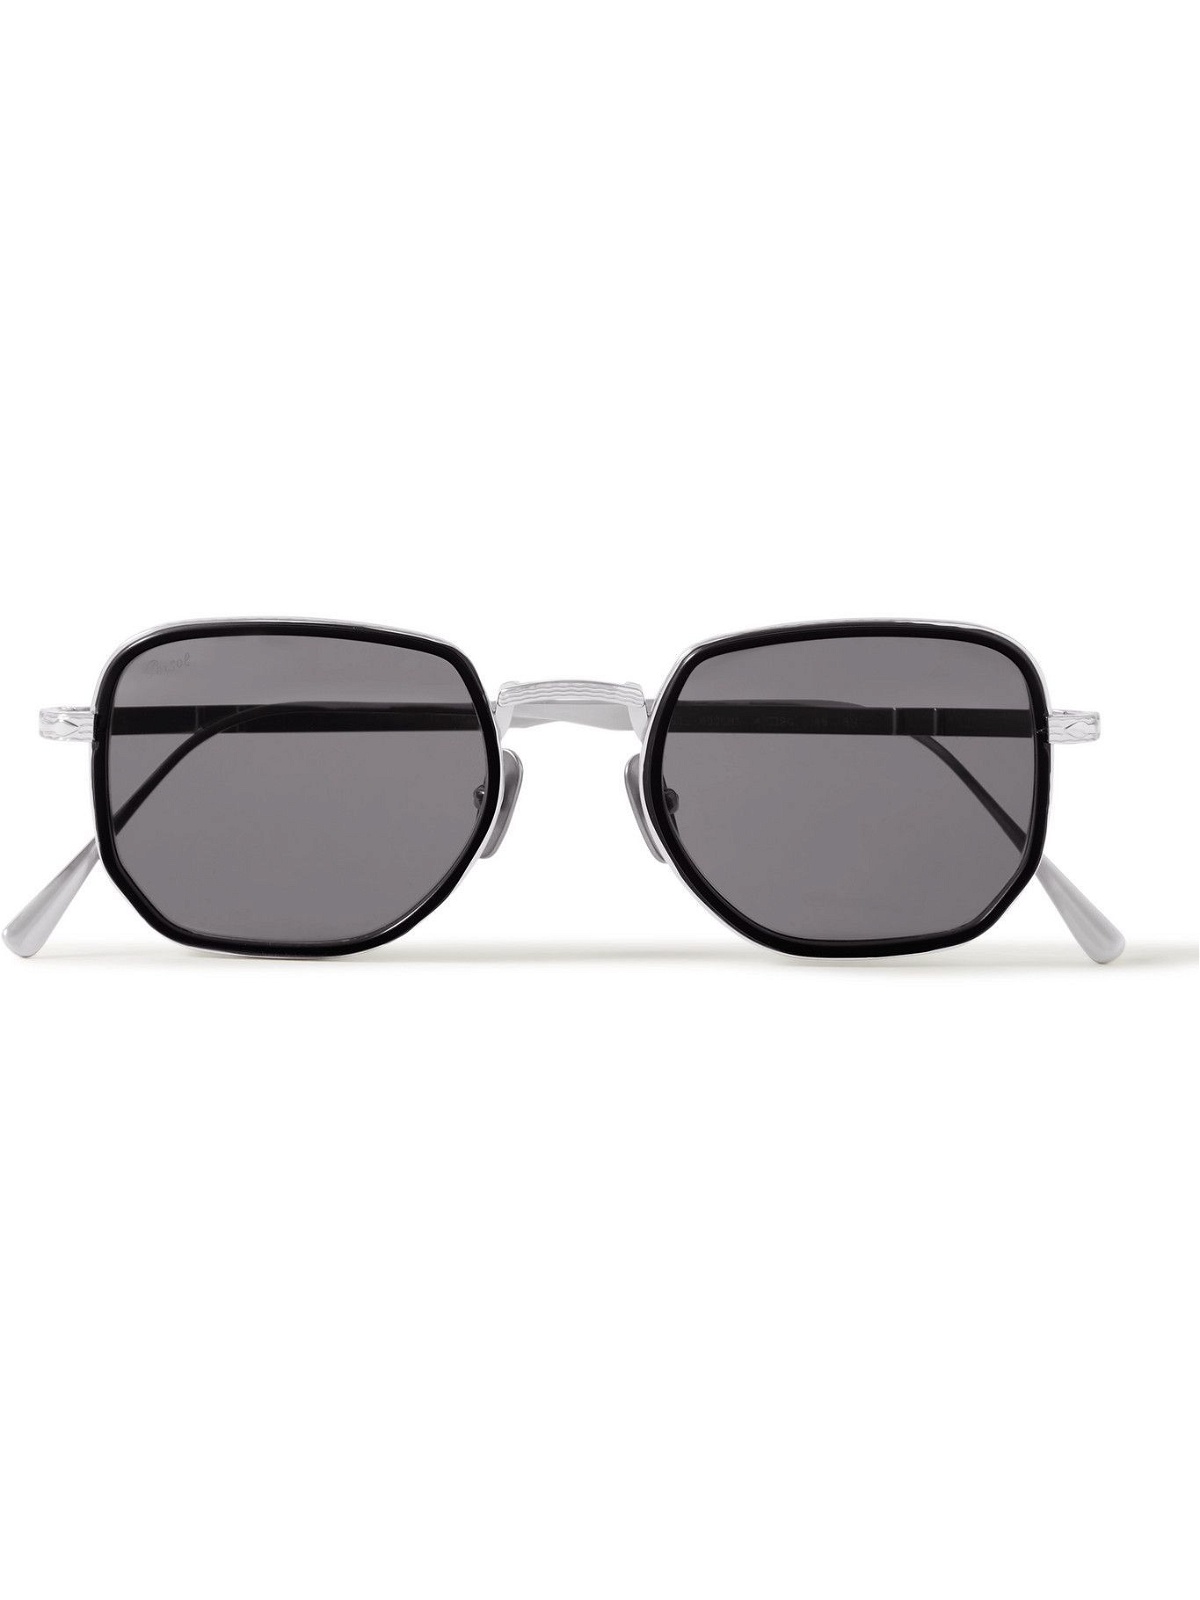 Sunglasses for Man Titanium frame shaded smoke blue lens (ms50302) –  Maseratistore